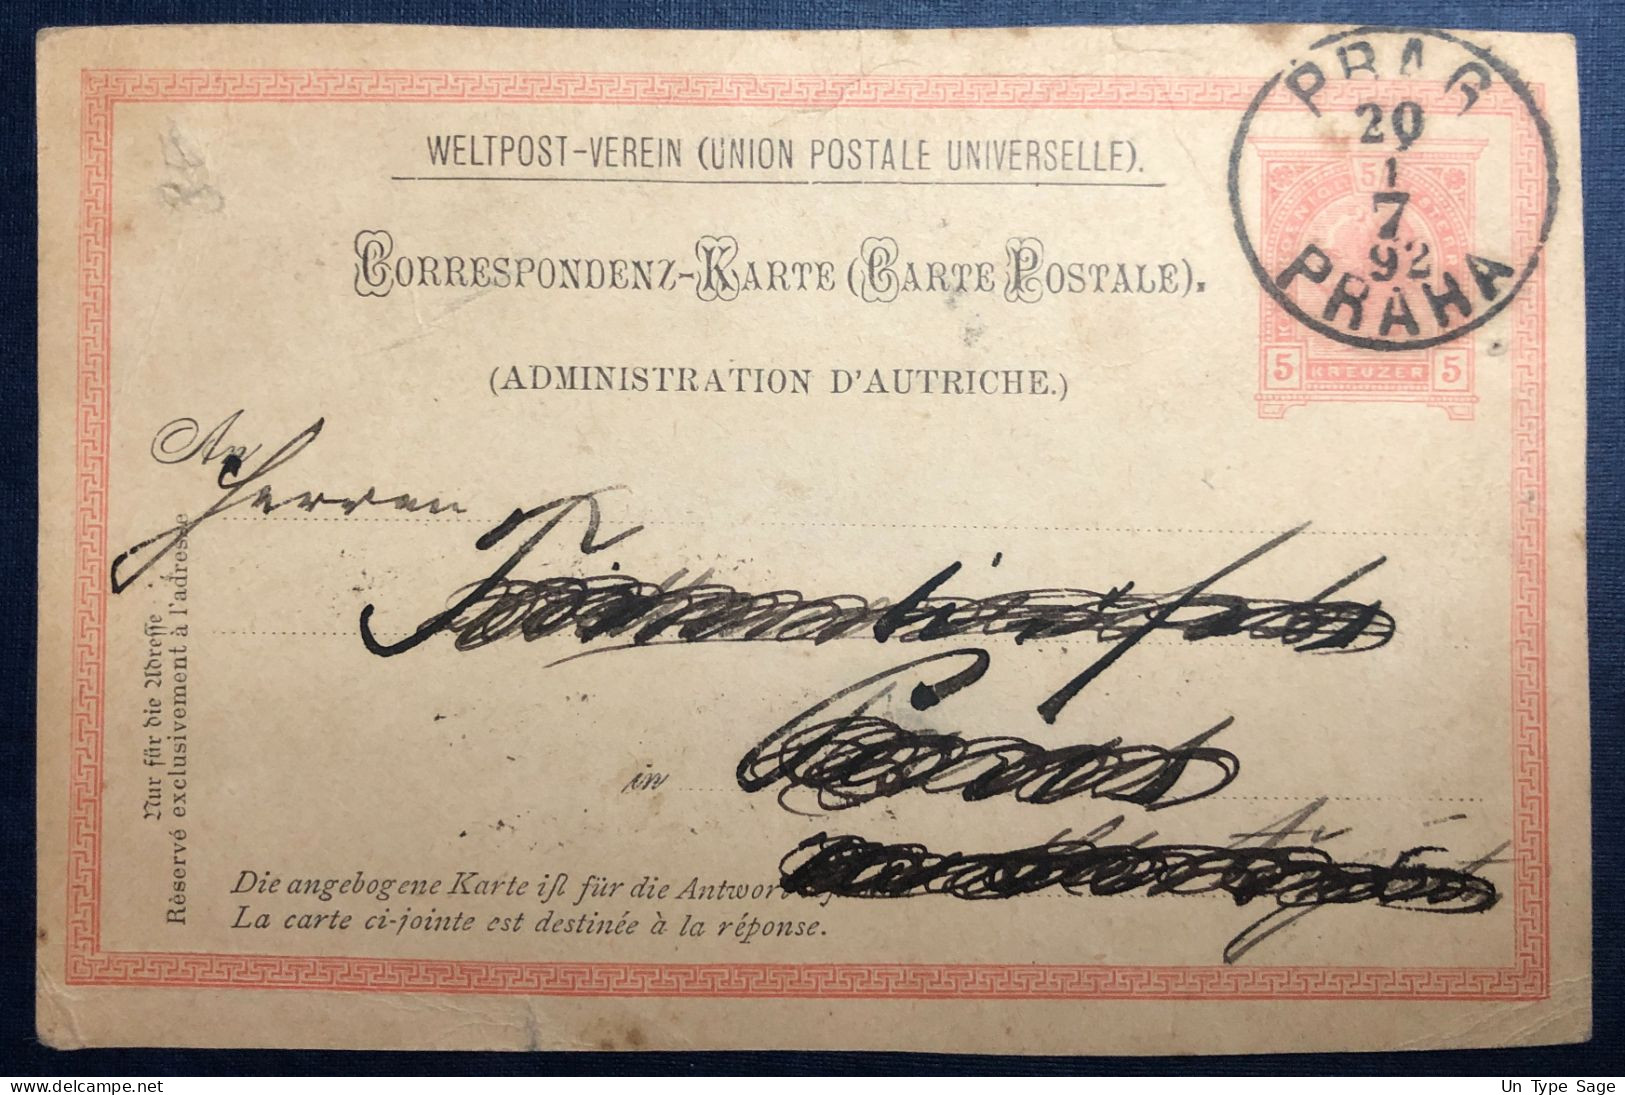 Tchécoslovaquie, Entier Carte Postale De Prague 20.7.1892 - (N545) - Cartoline Postali